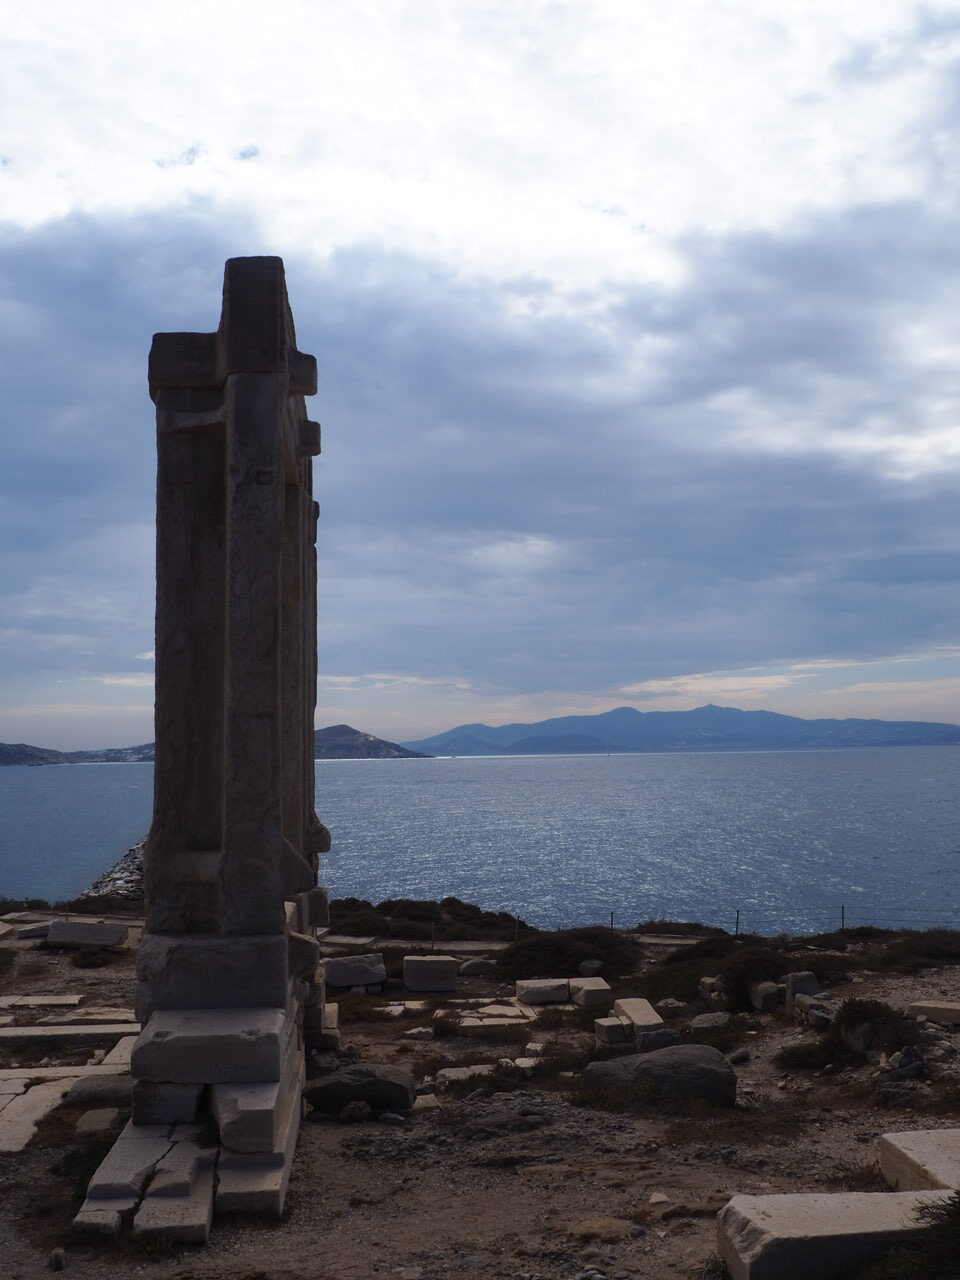 porte temple d'apolon grece naxos cyclades clioandco blog voyage vue mer egee